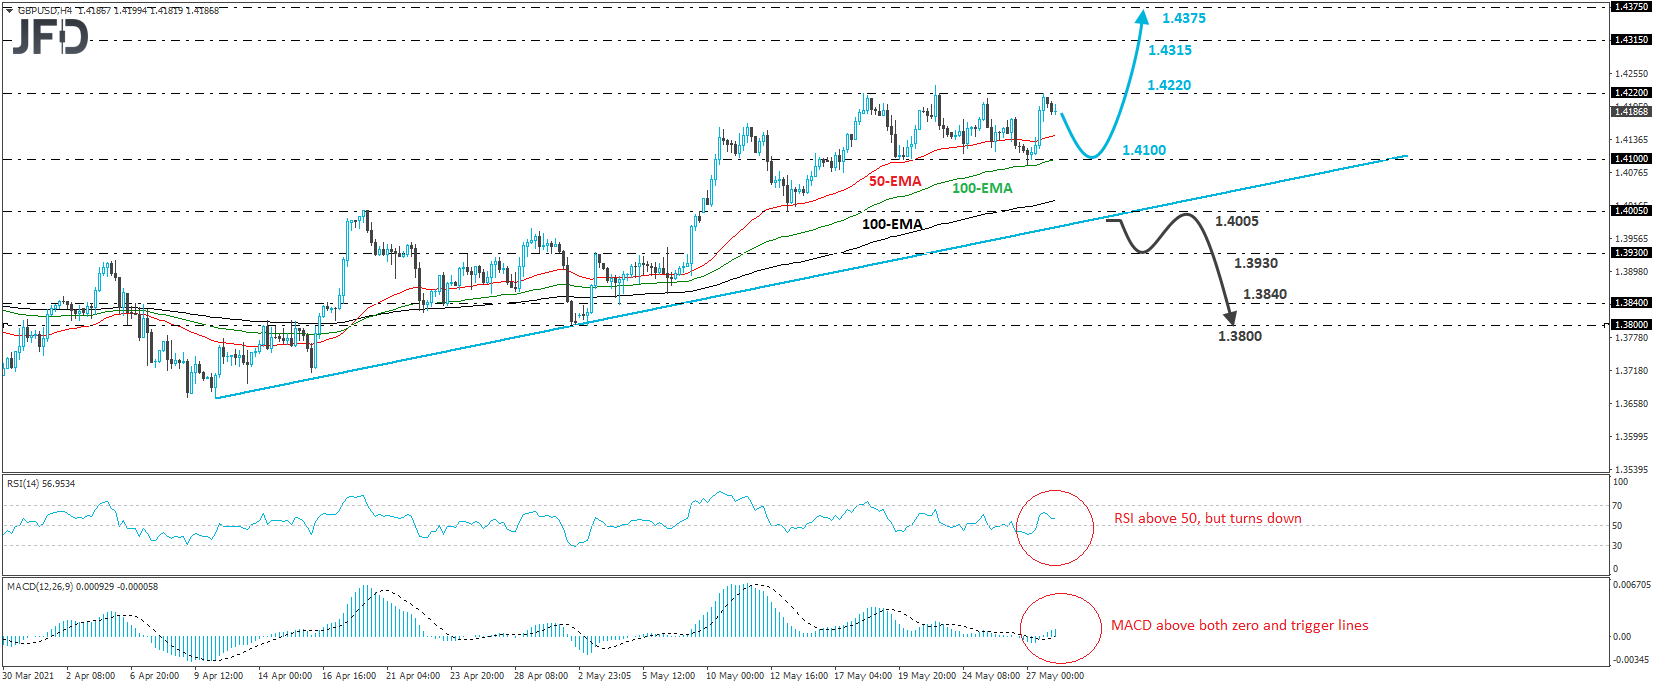 GBP/USD 4-hour chart technical analysis